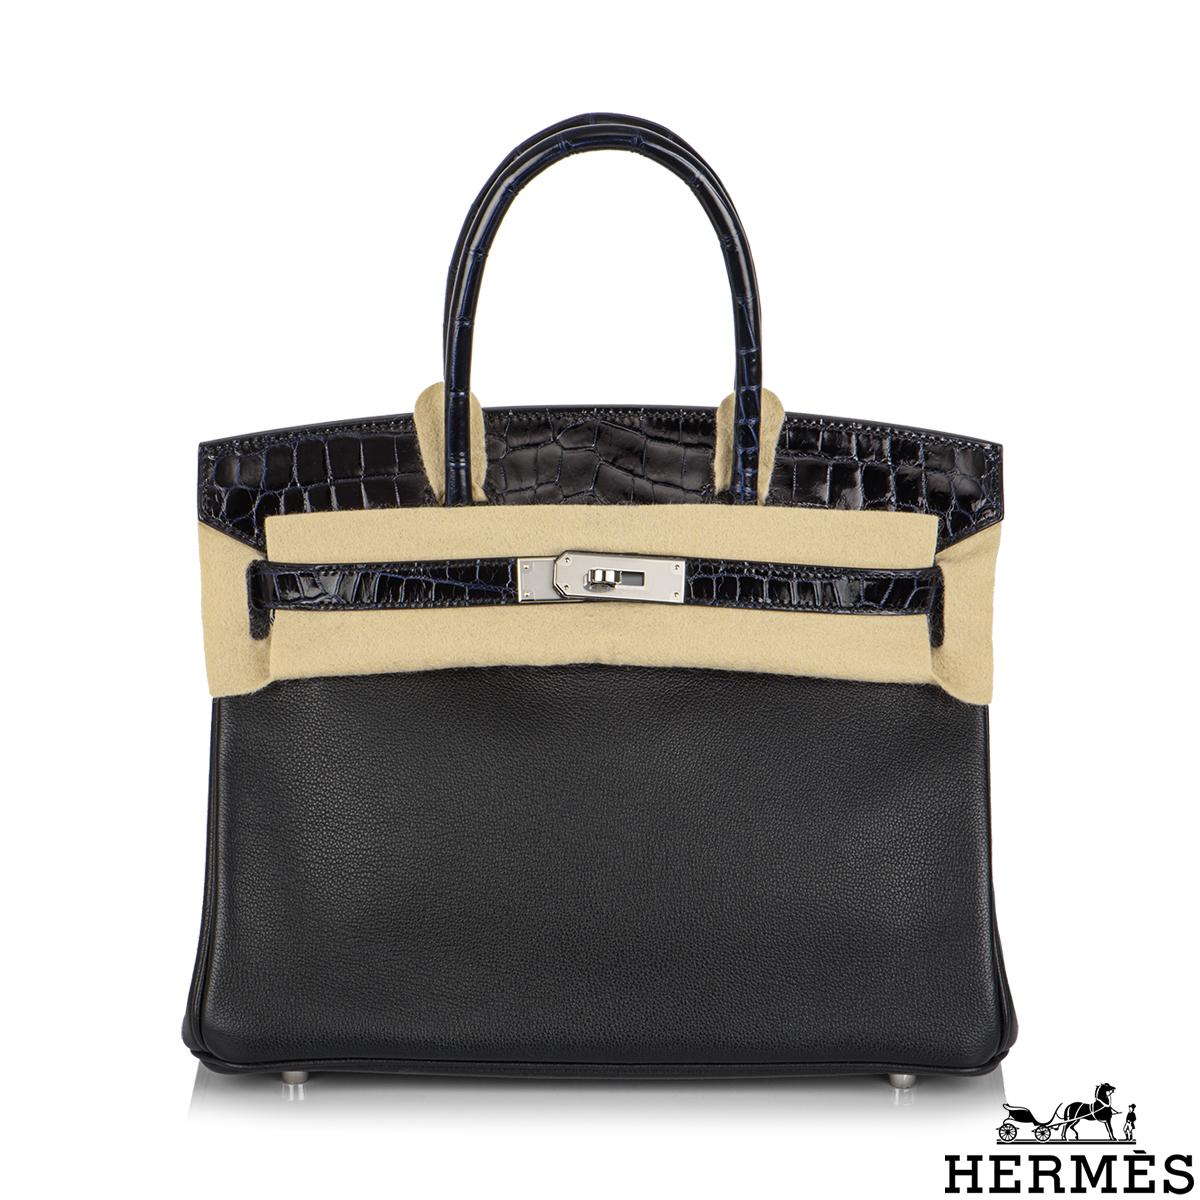 A gorgeous Hermès Touch Birkin 30 cm bag. The exterior of this Birkin 